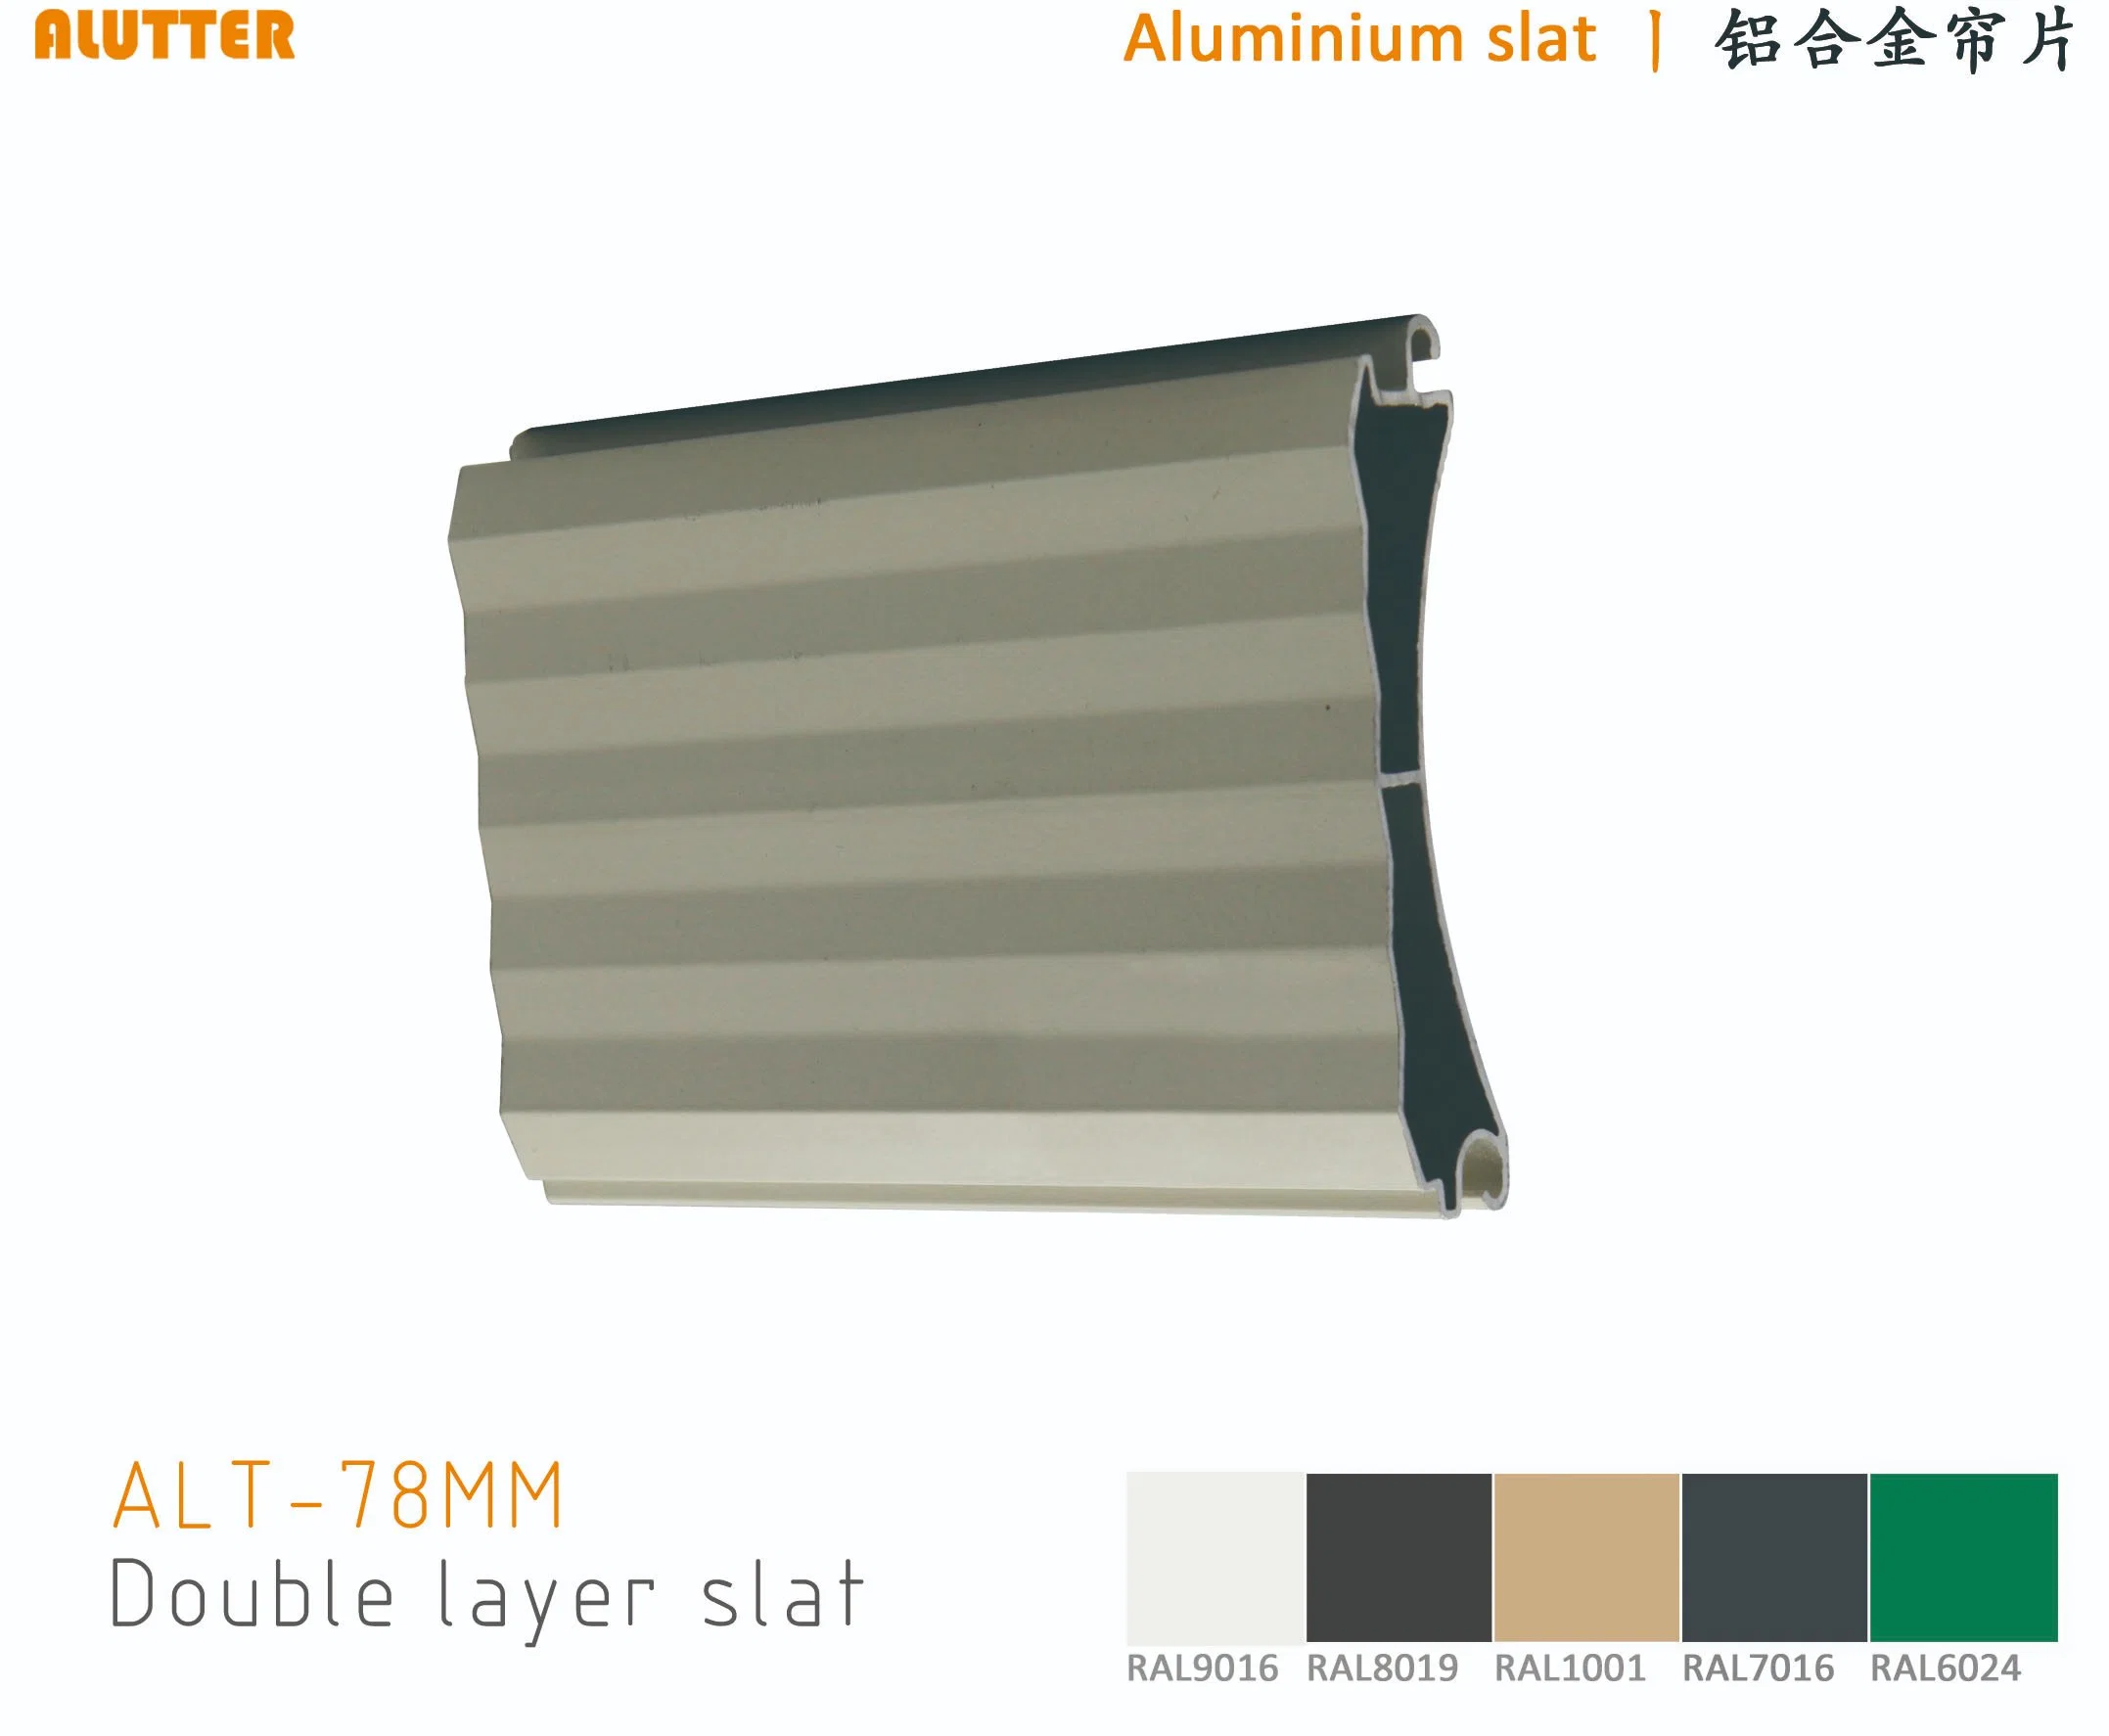 Aluminium Roller Shutter Profile